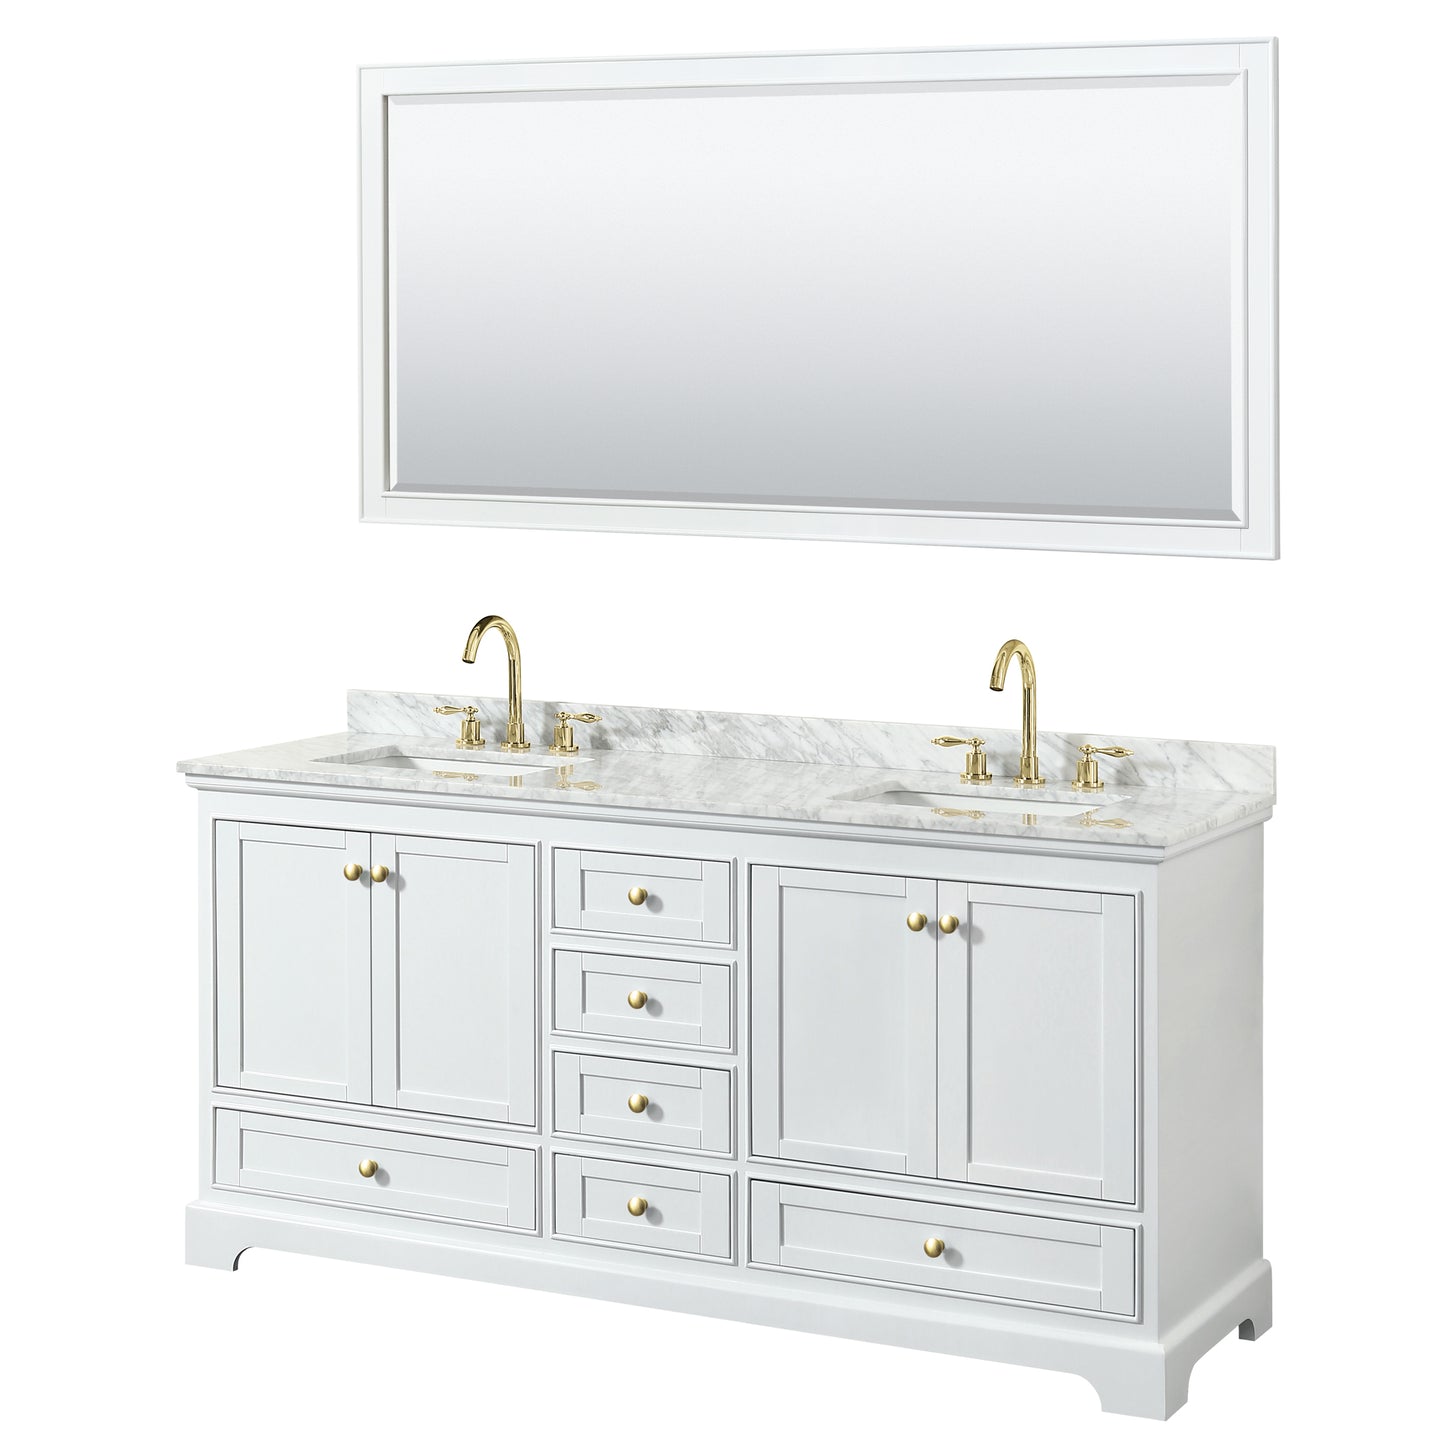 Wyndham Collection Deborah 72 Inch Double Bathroom Vanity in White, White Carrara Marble Countertop, Undermount Square Sinks, Brushed Gold Trim - Luxe Bathroom Vanities